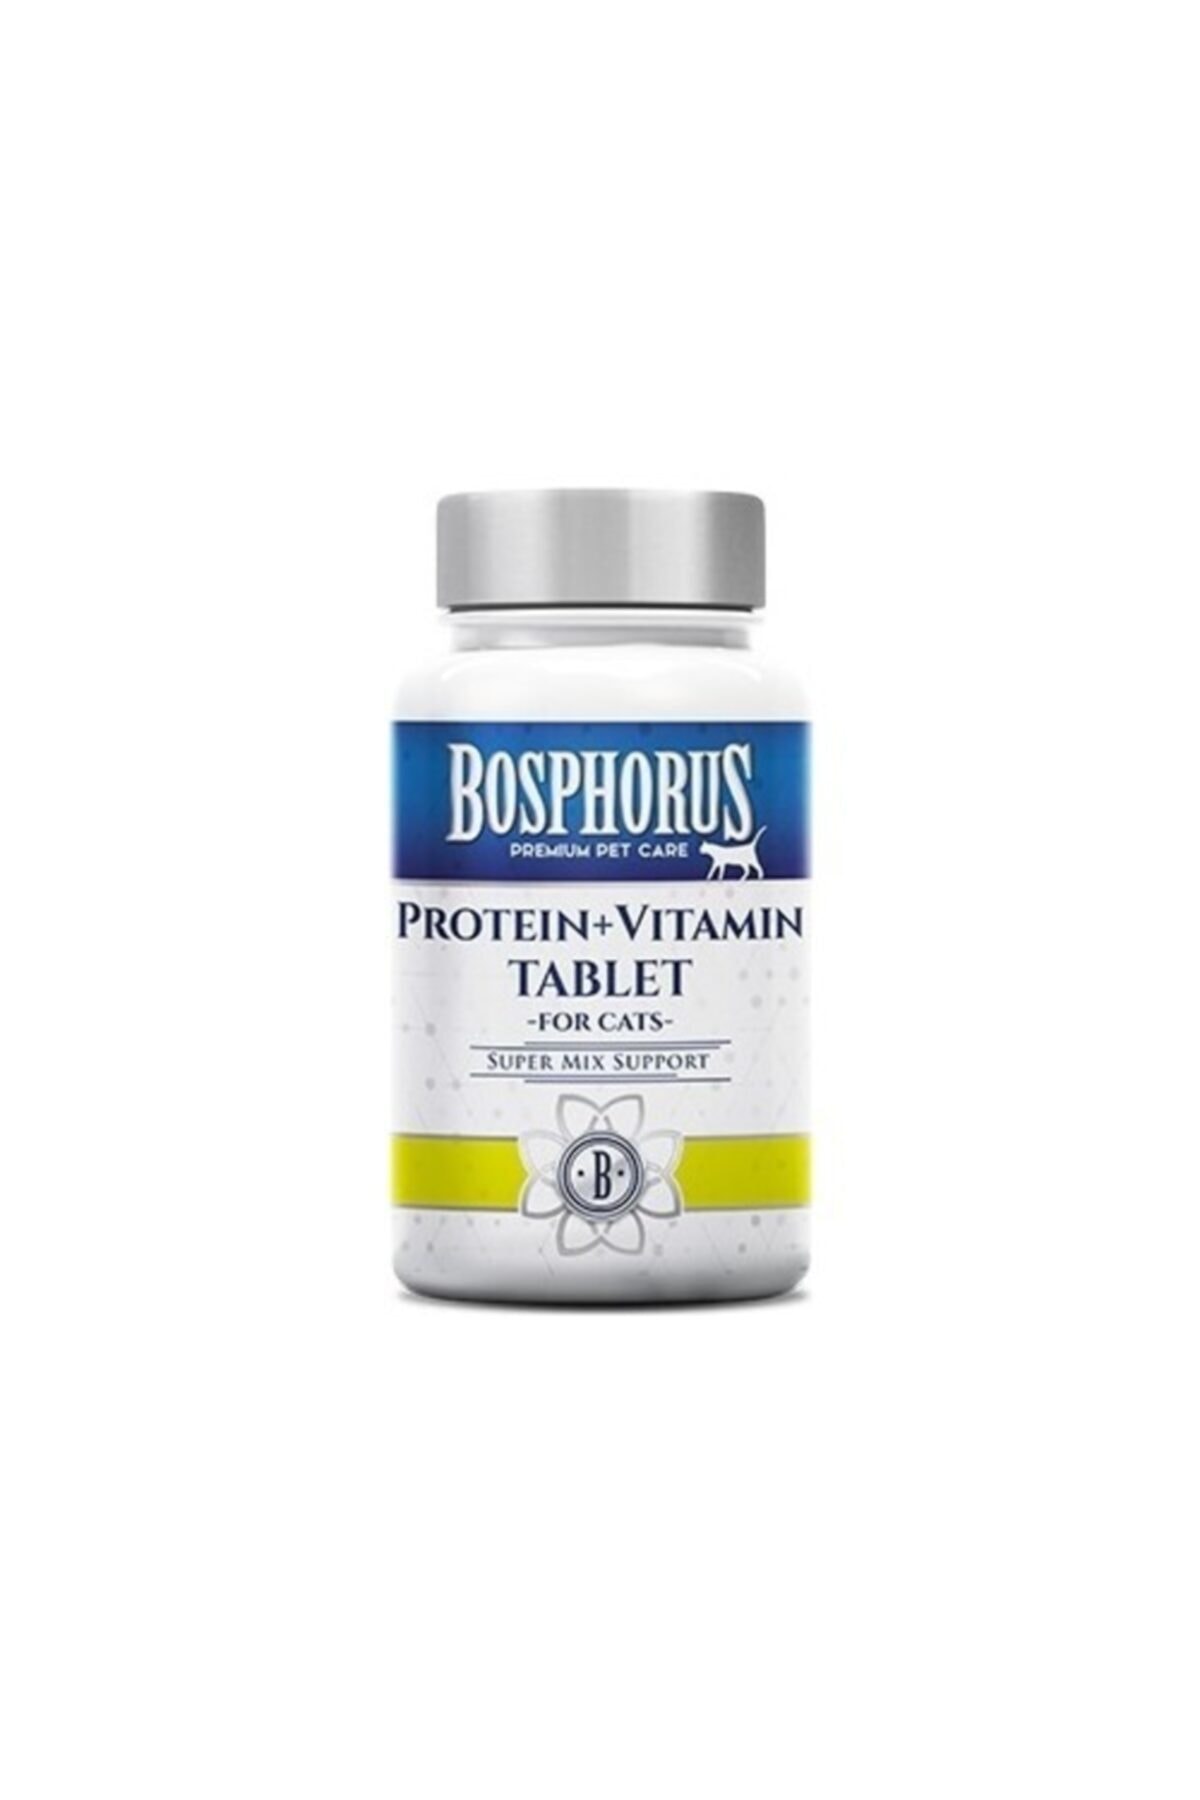 Bosphorus Protein Vitamin Kedi Tableti